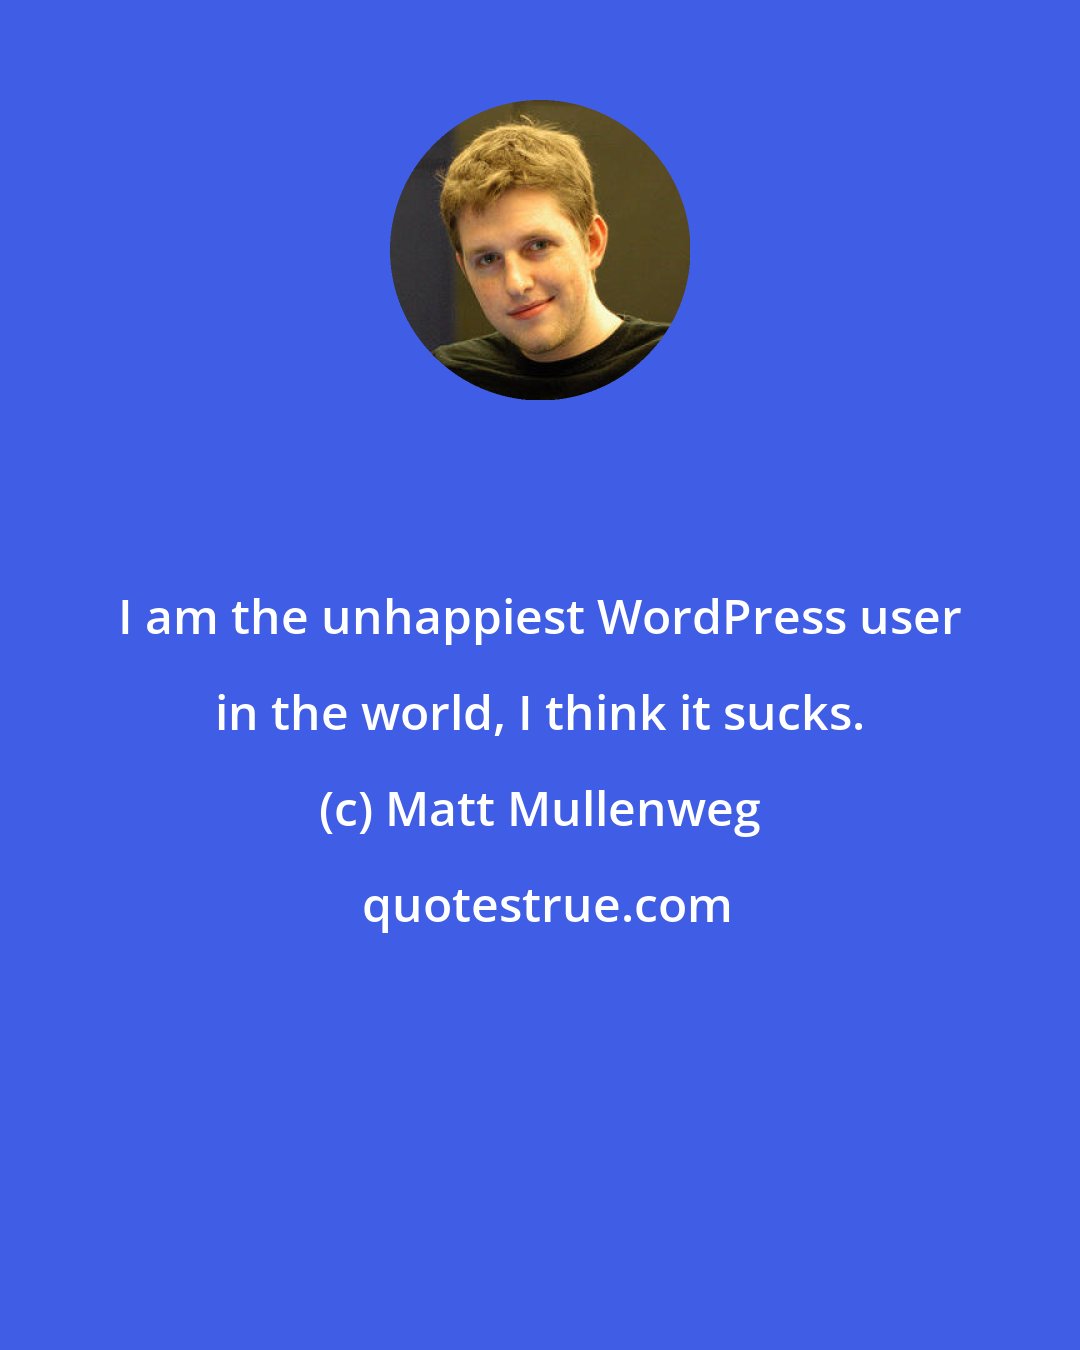 Matt Mullenweg: I am the unhappiest WordPress user in the world, I think it sucks.